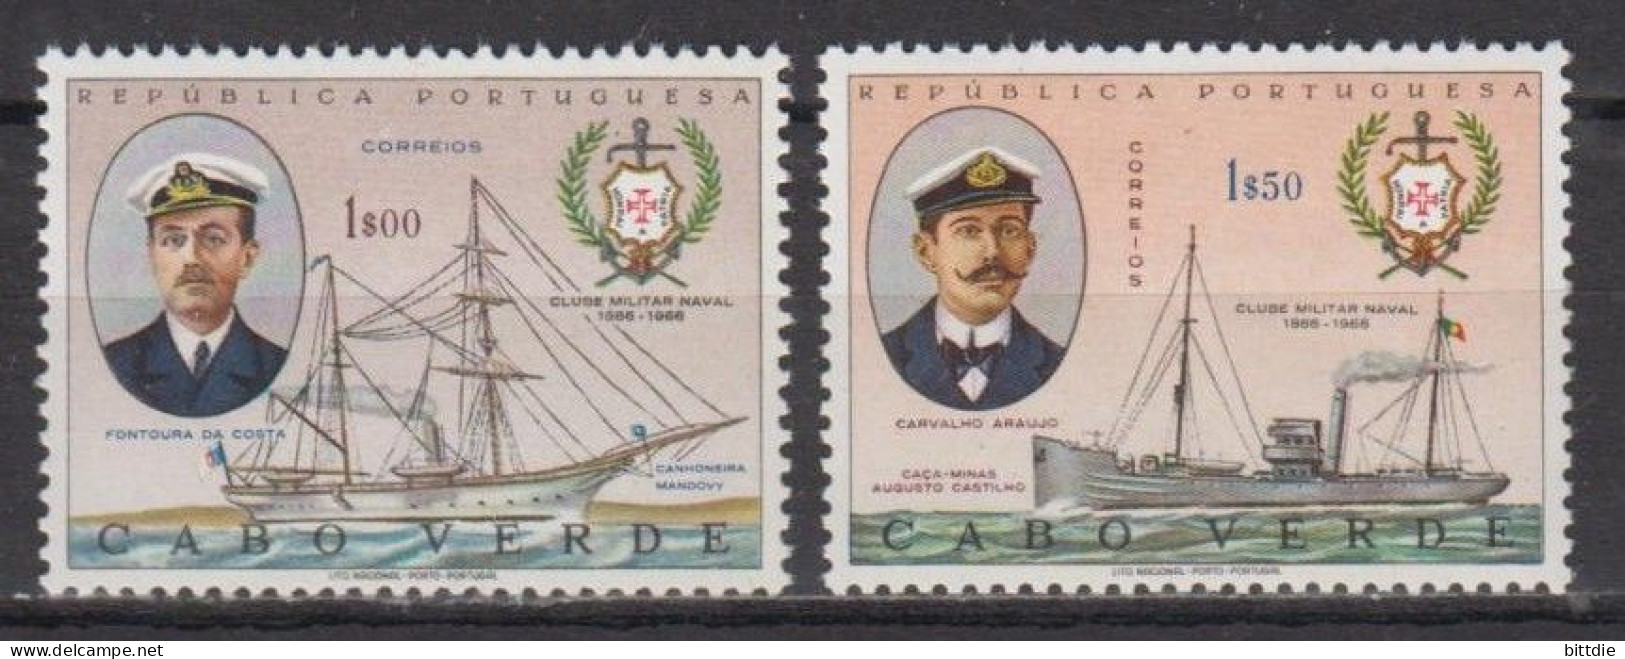 Kap Verde, Schiffe  342/43 , Xx  (U 8404) - Islas De Cabo Verde